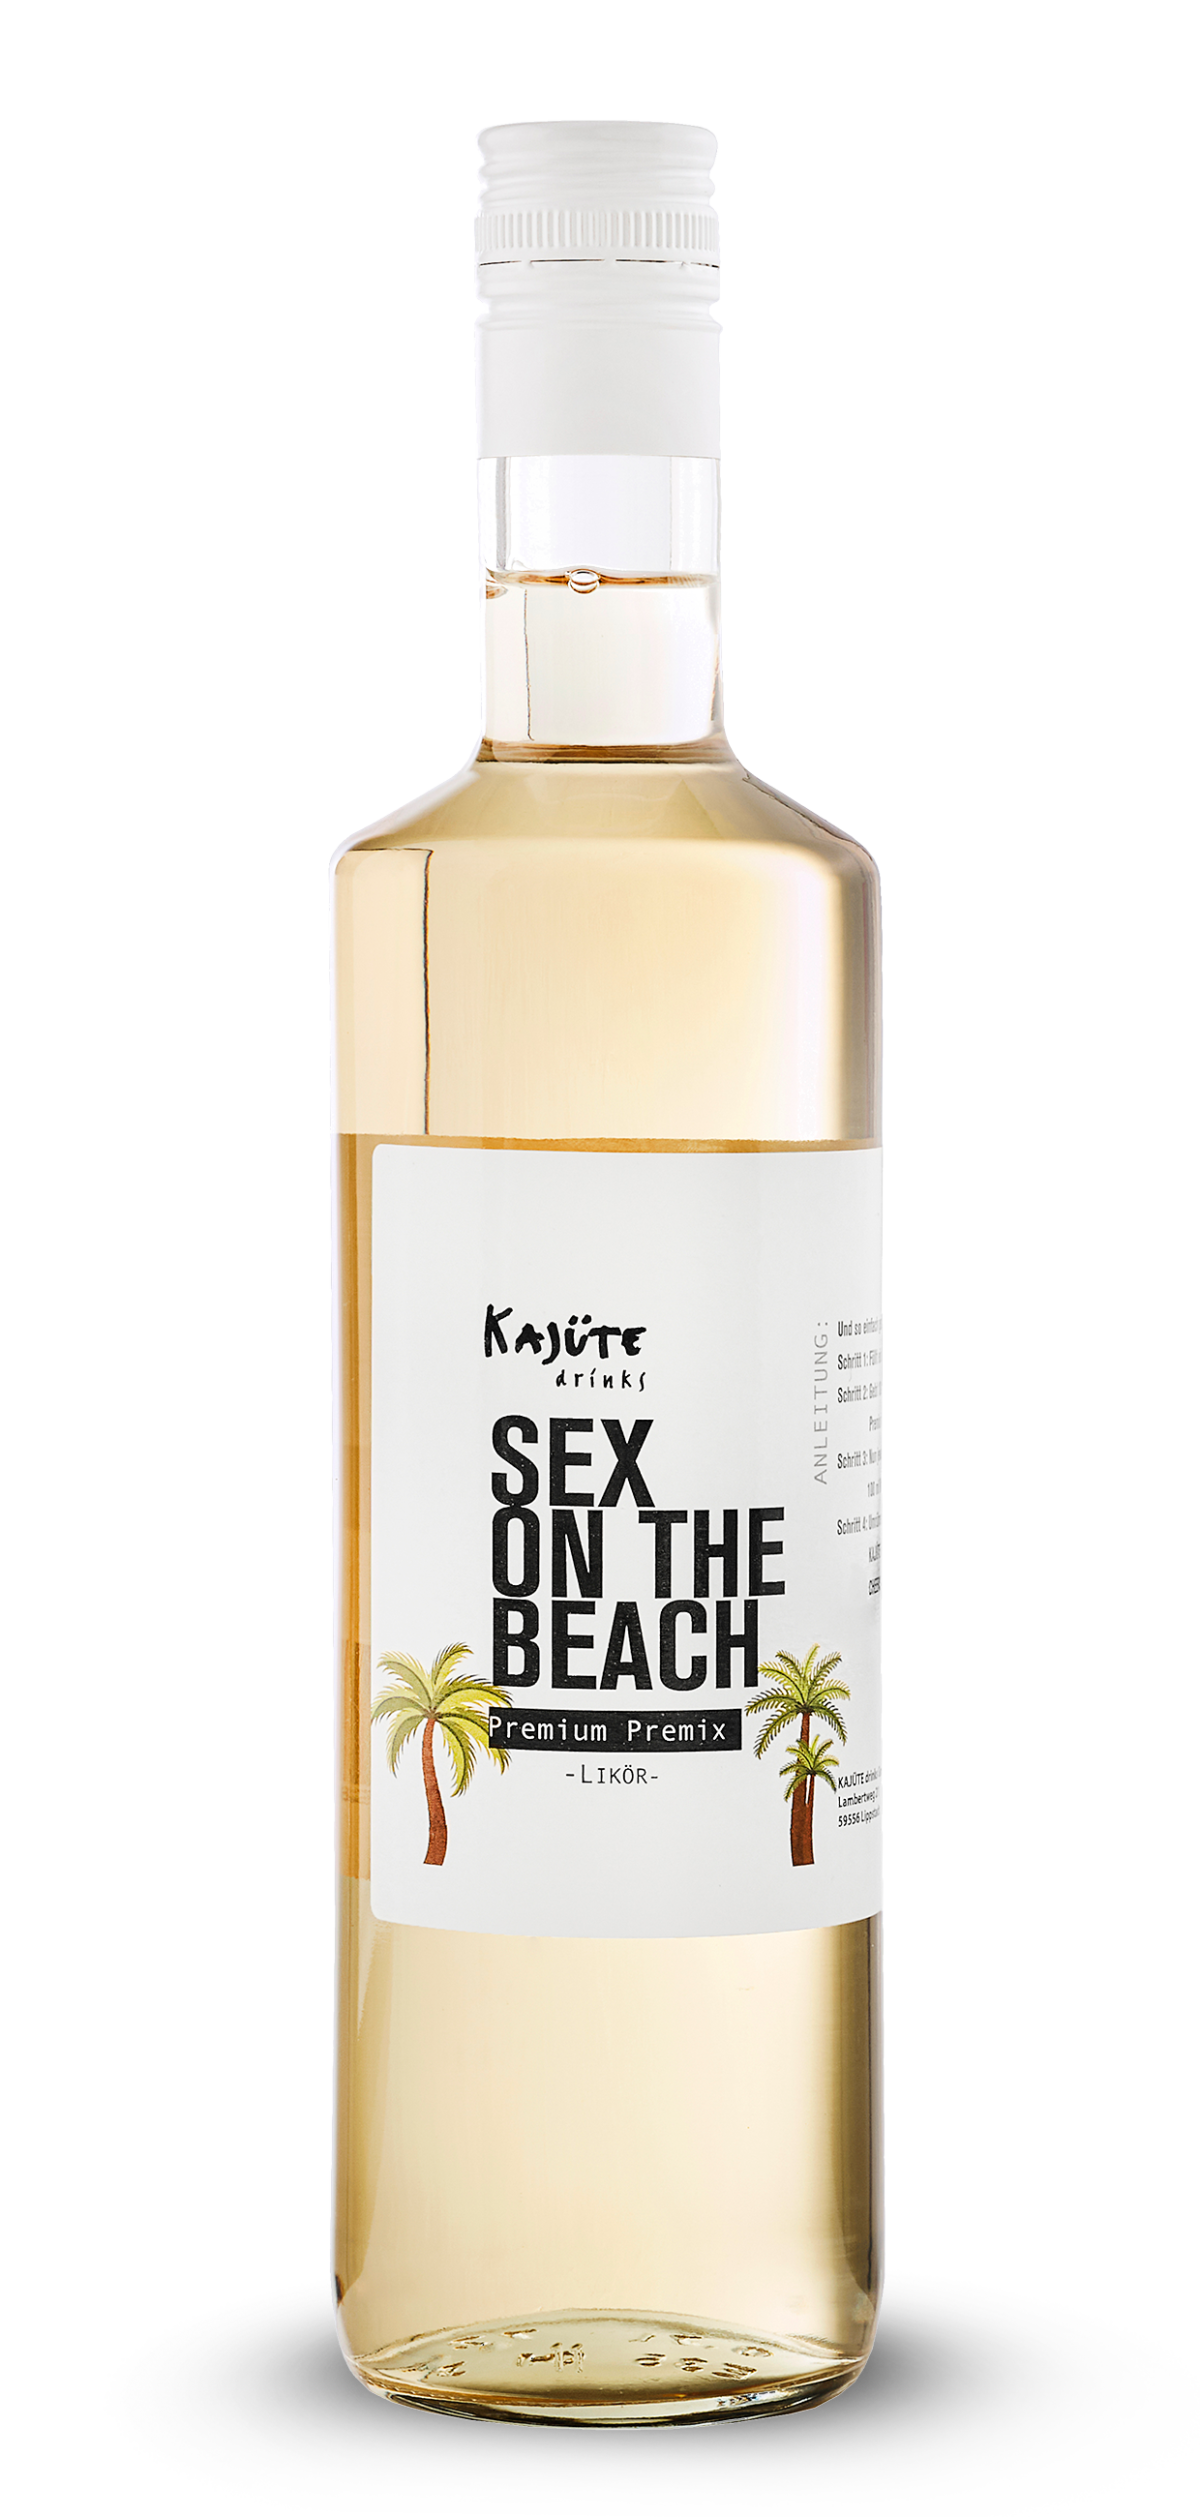 Sex On The Beach KajÜte Drinks